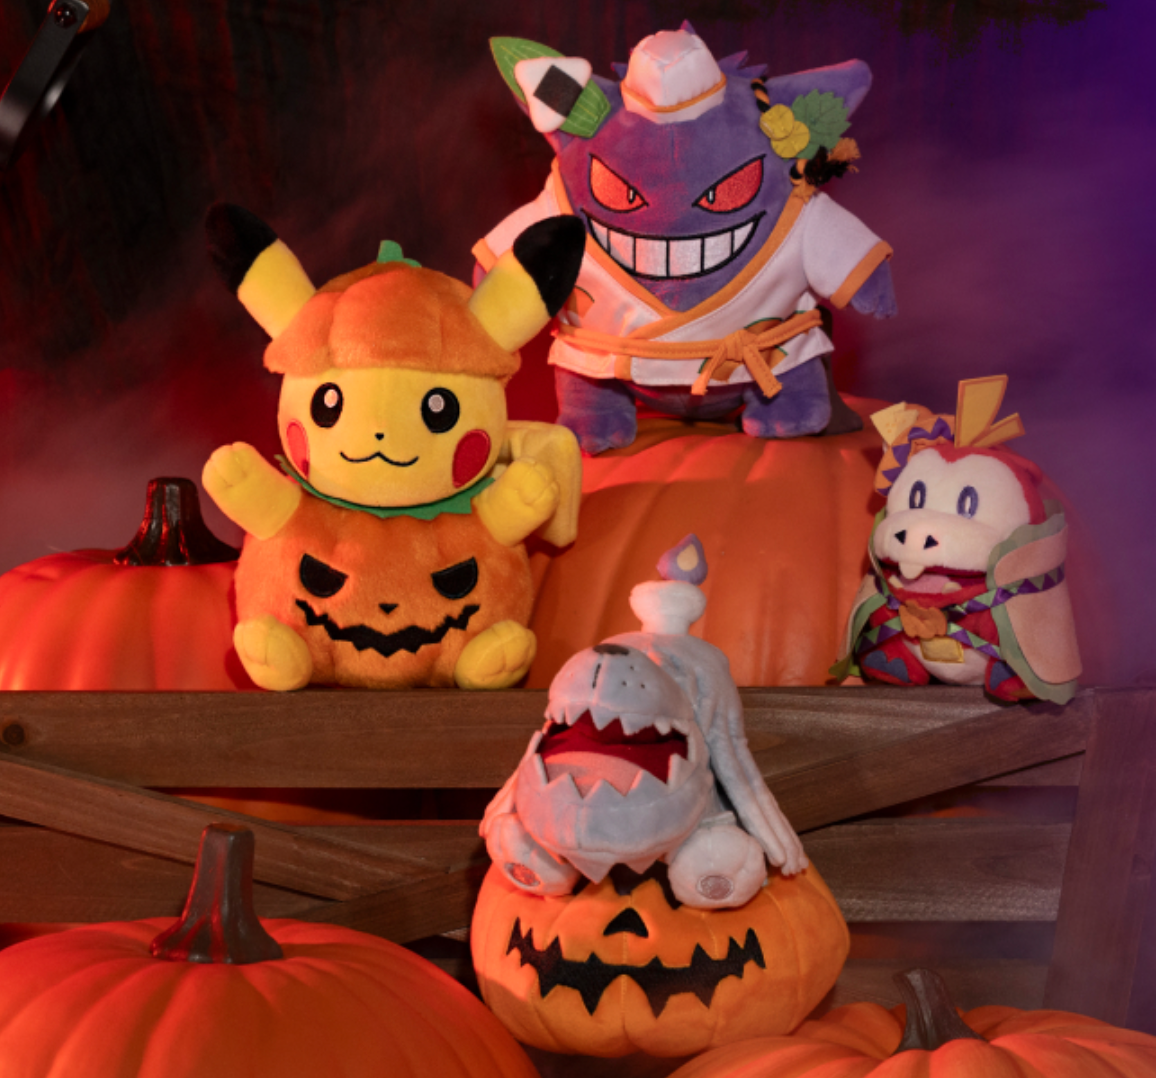 Halloween-themed Pokémon Plushies